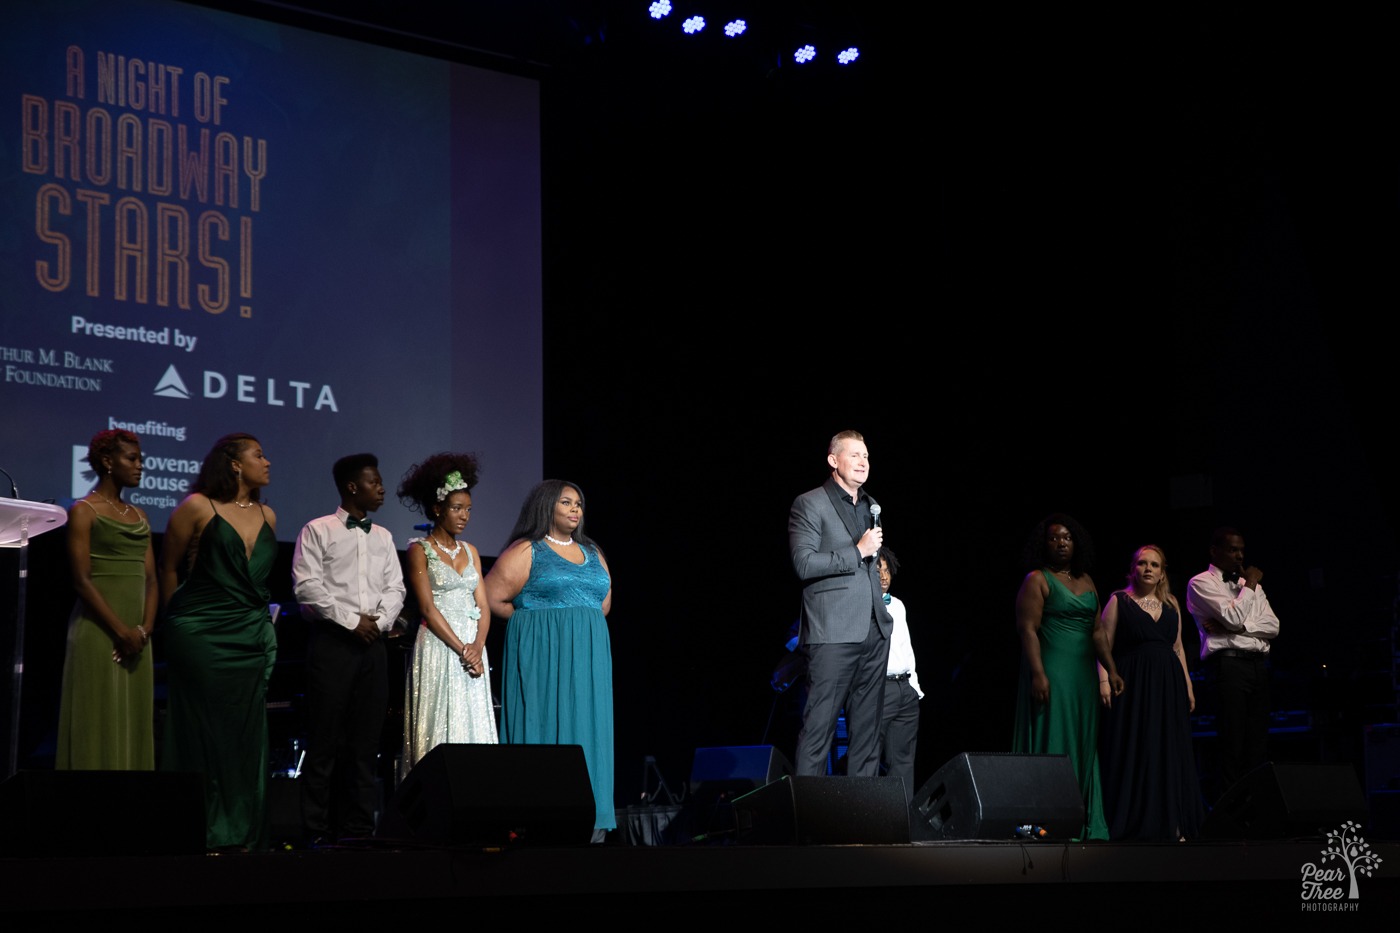 Covenant House International CEO Bill Bedrossian speaking onstage at Night of Broadway Stars 2023 in Atlanta